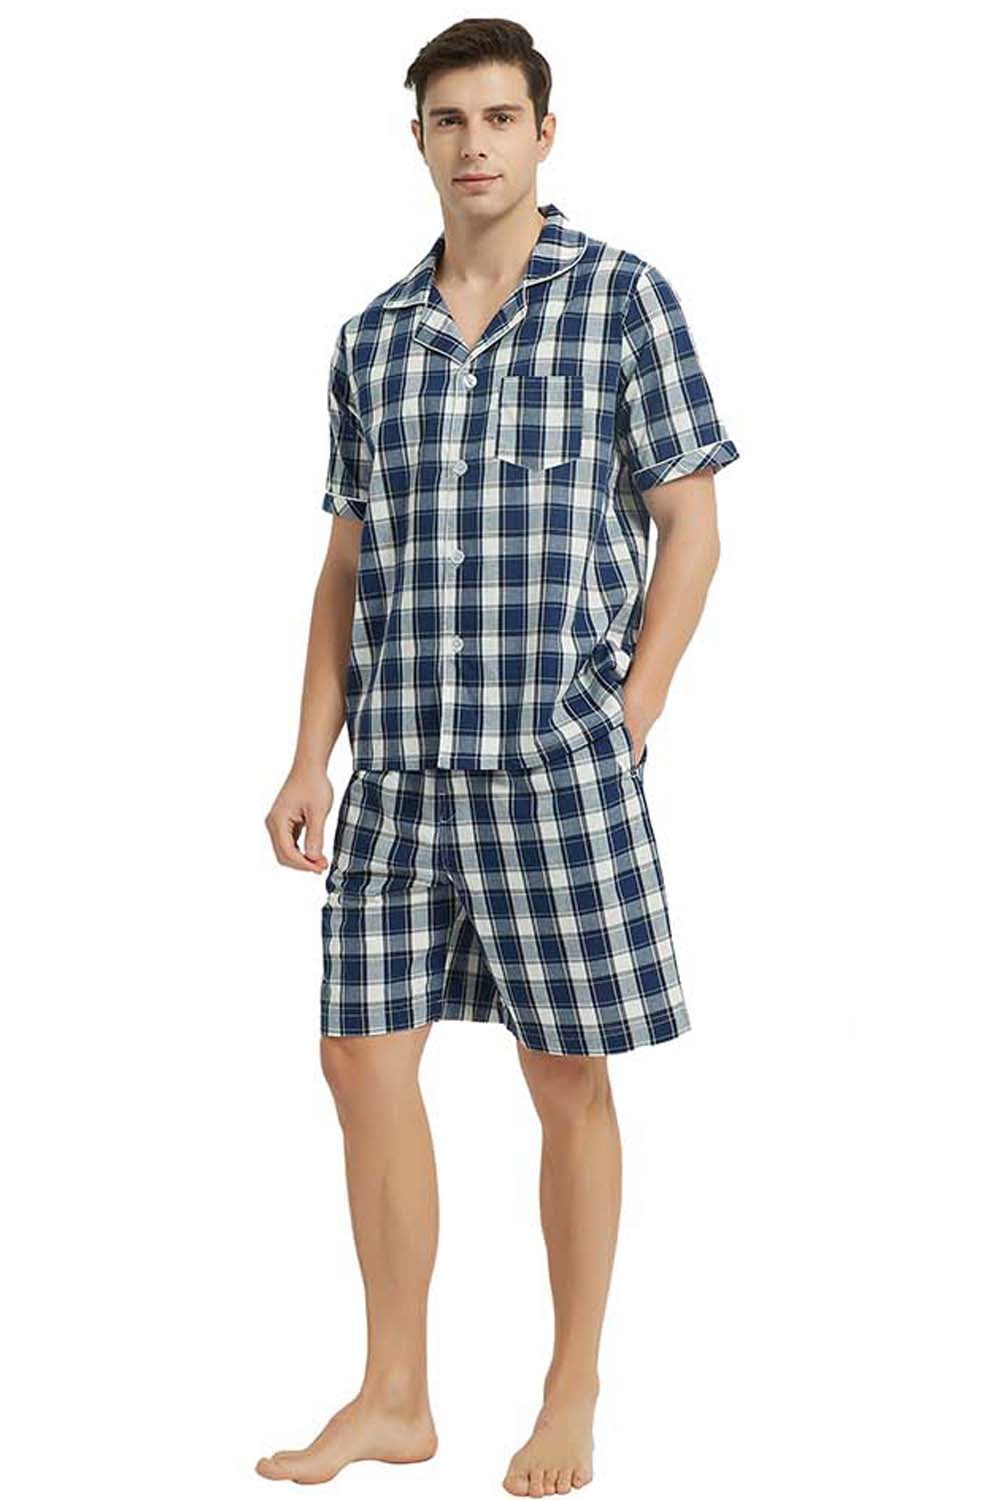 Vulcanodon Mens Cotton Pajama Short Set, Button Down Pajama Set for Men ...